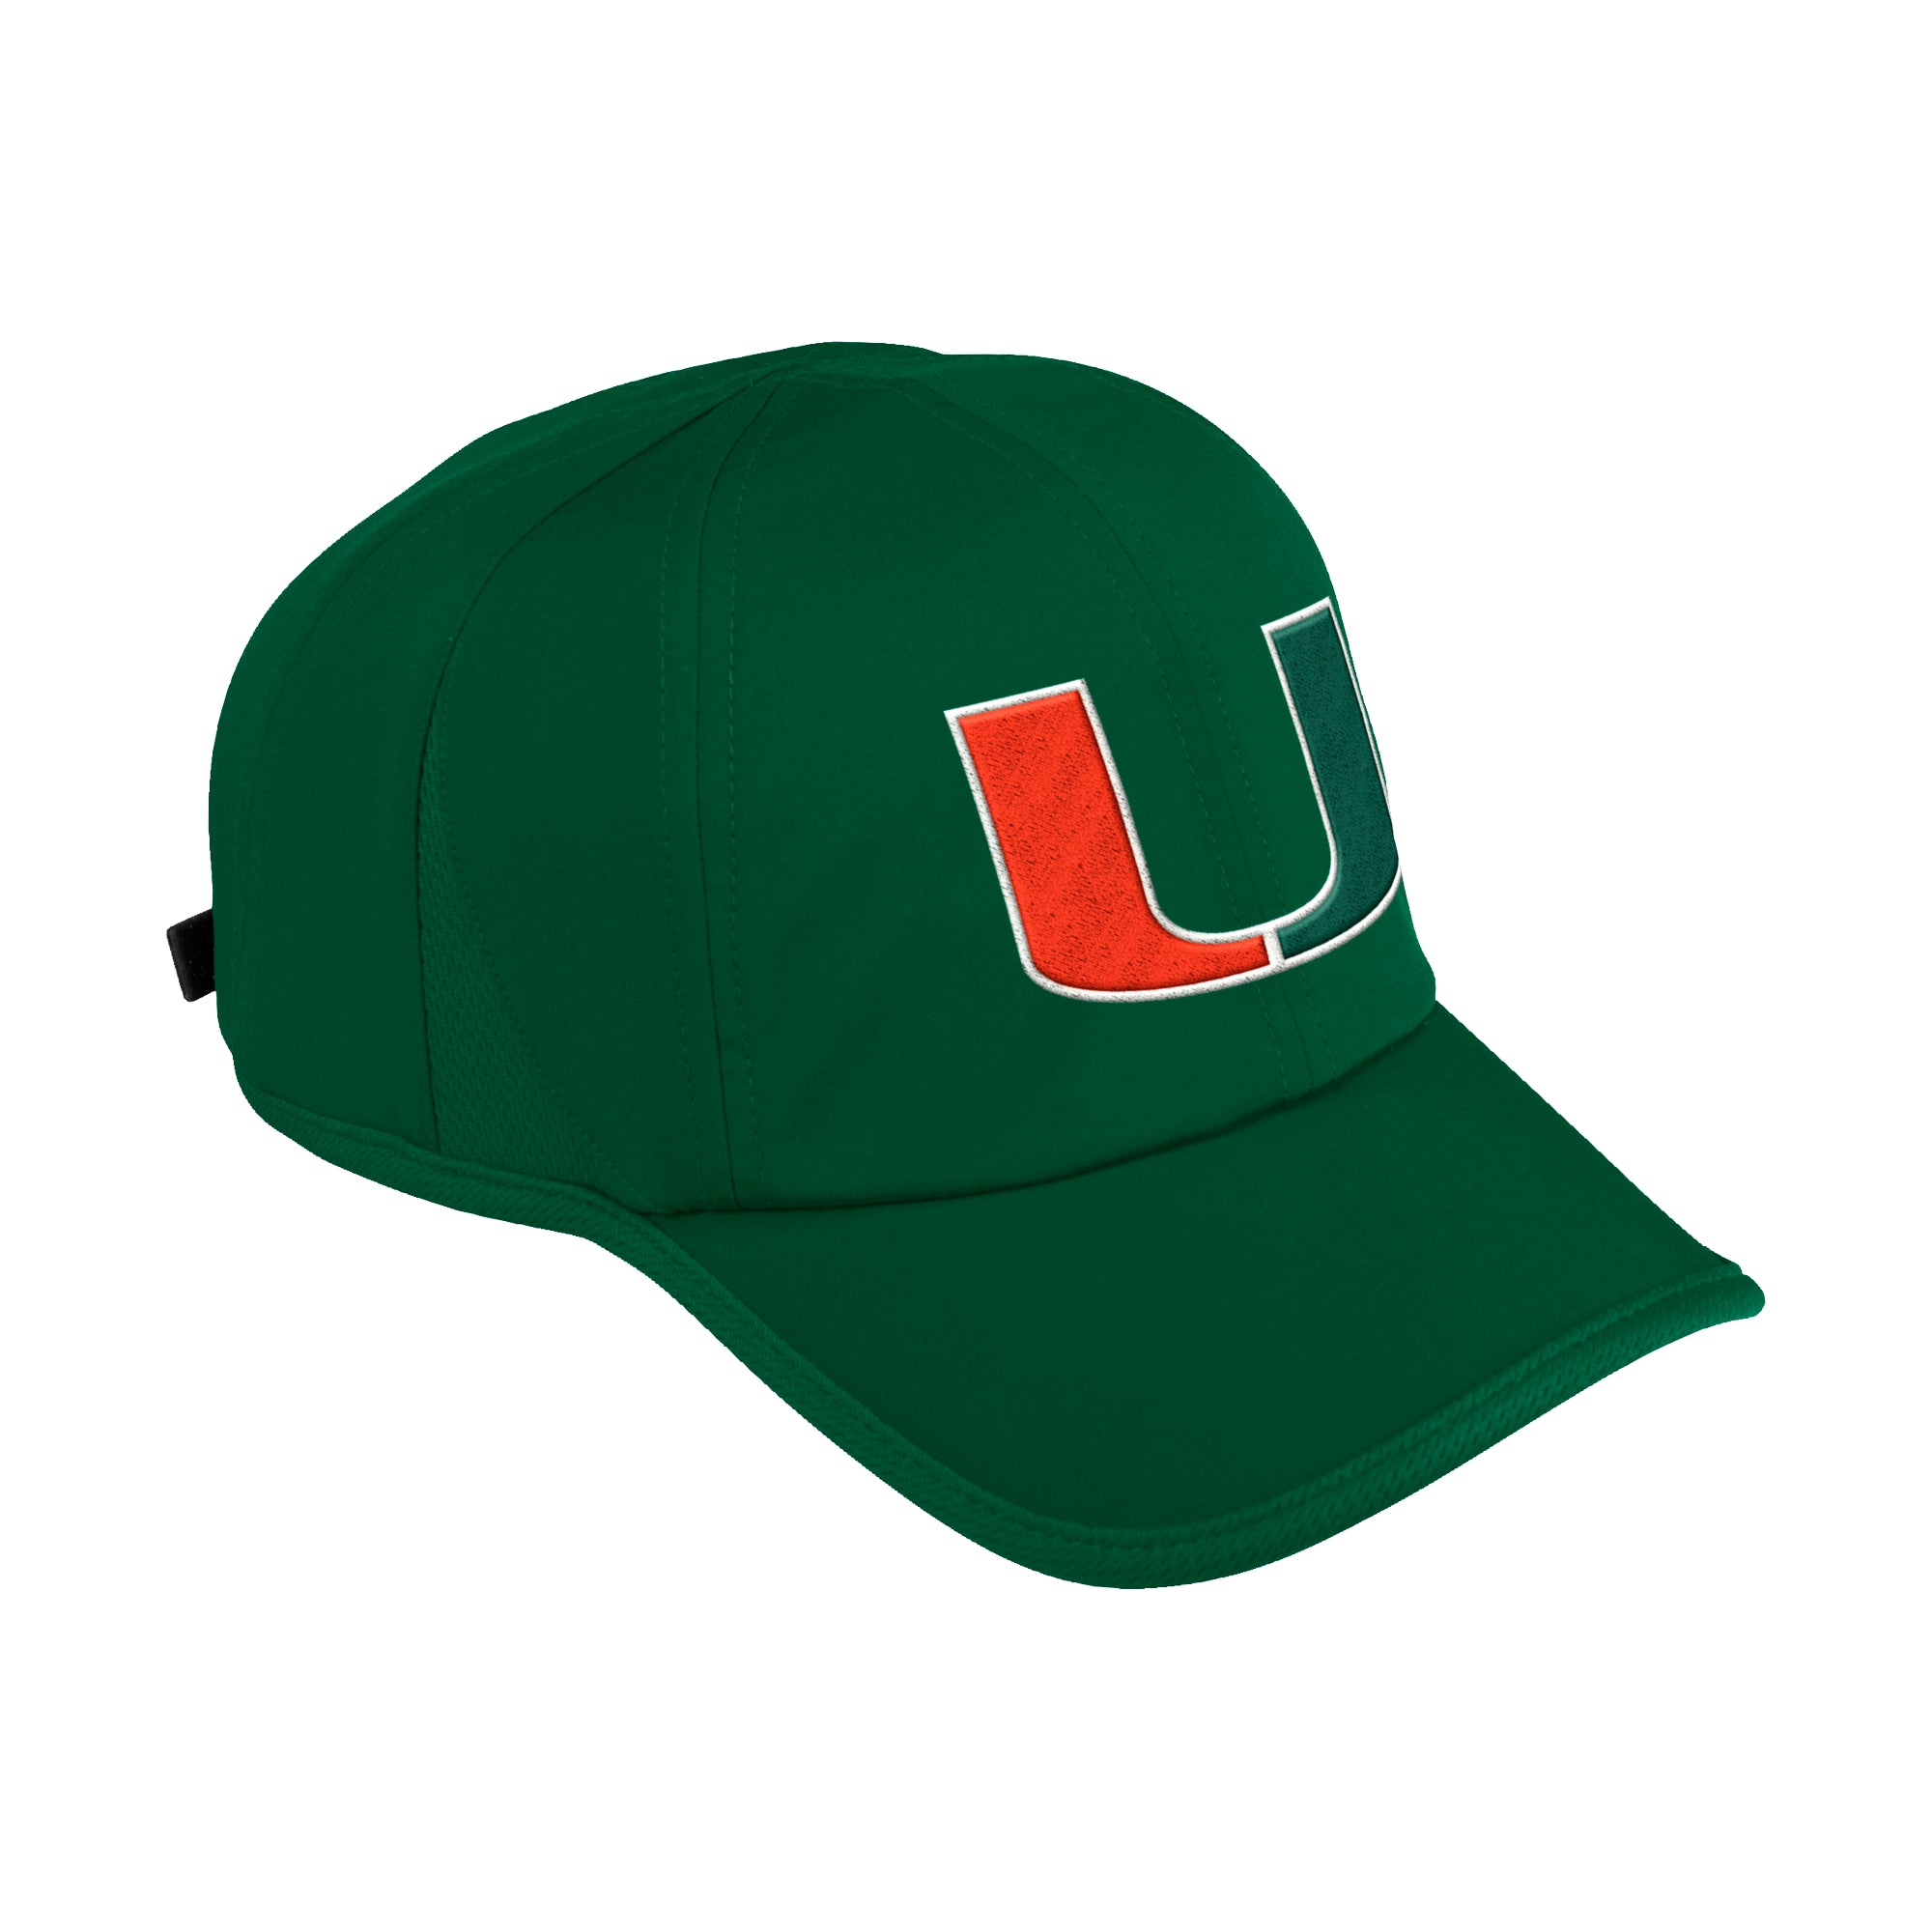 Miami Hurricanes adidas Superlite Adjustable Hat - Green